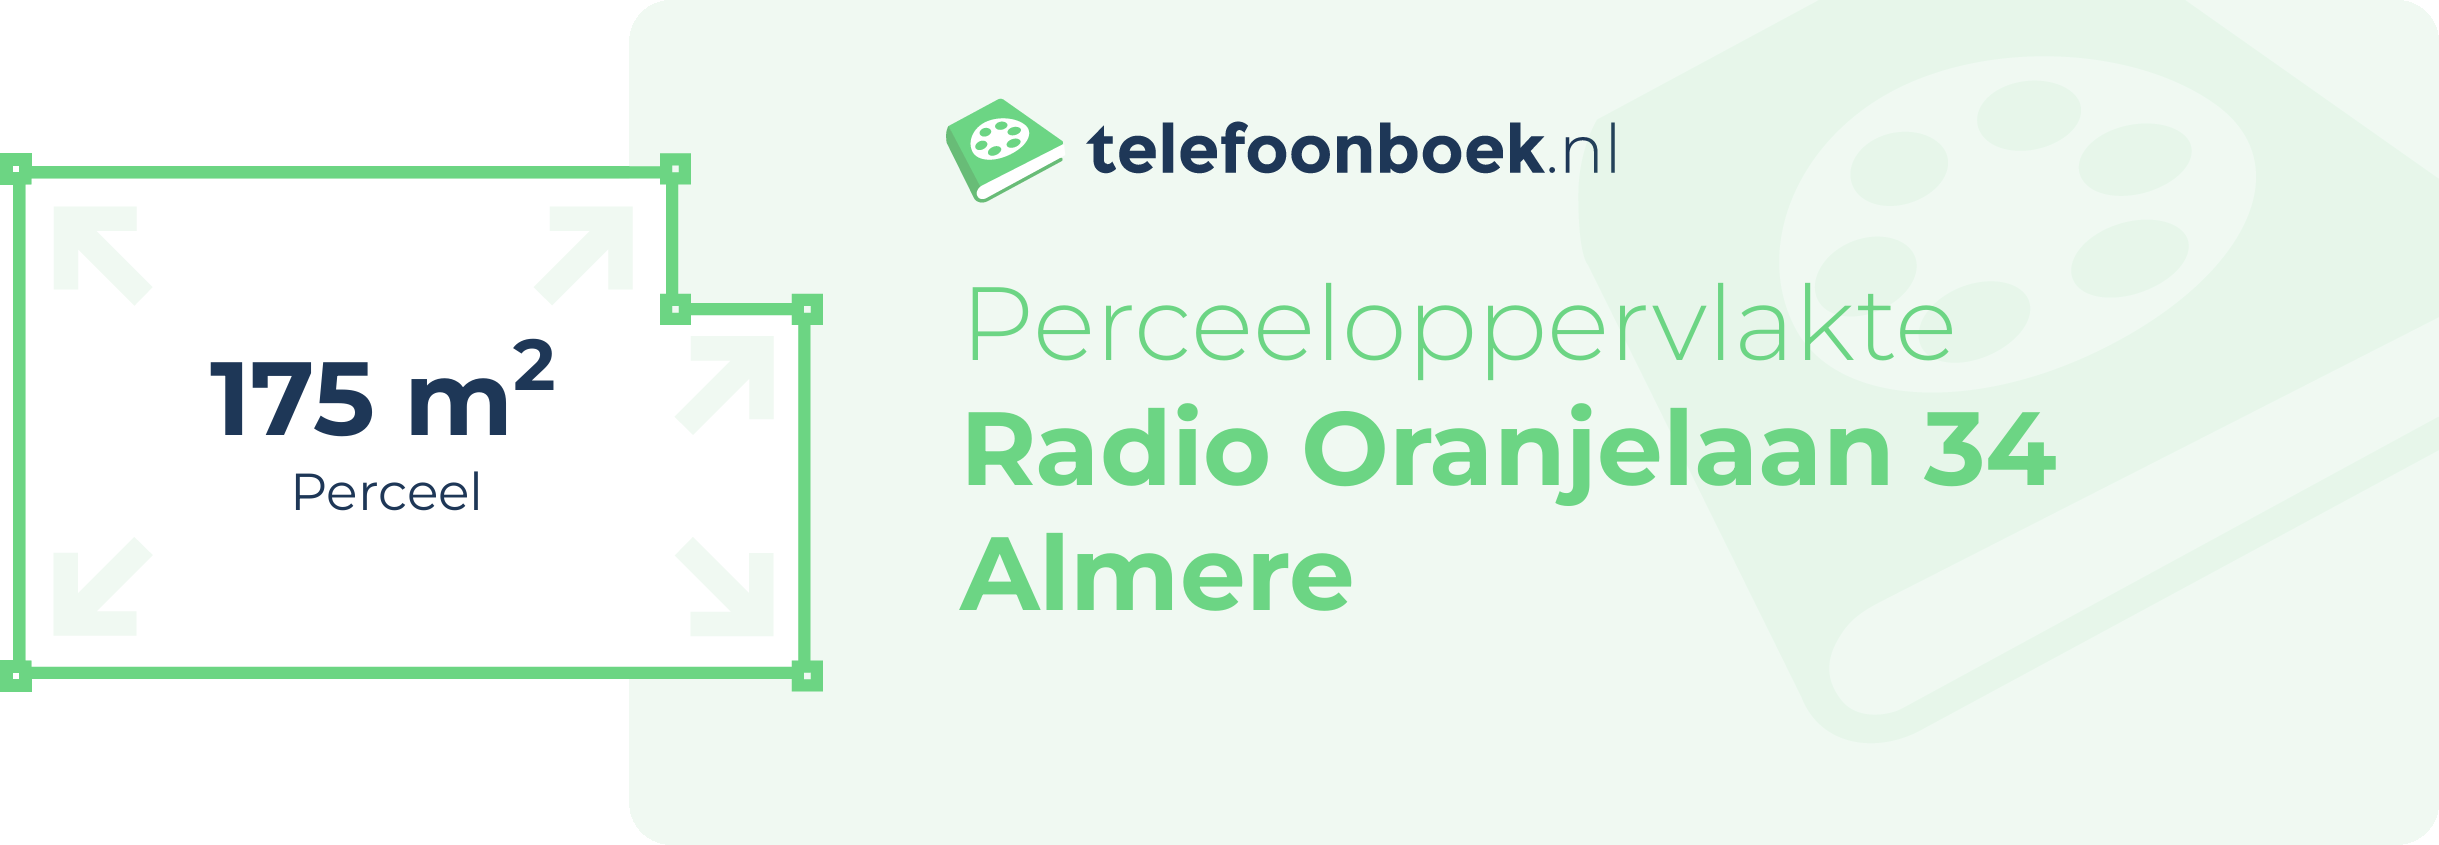 Perceeloppervlakte Radio Oranjelaan 34 Almere